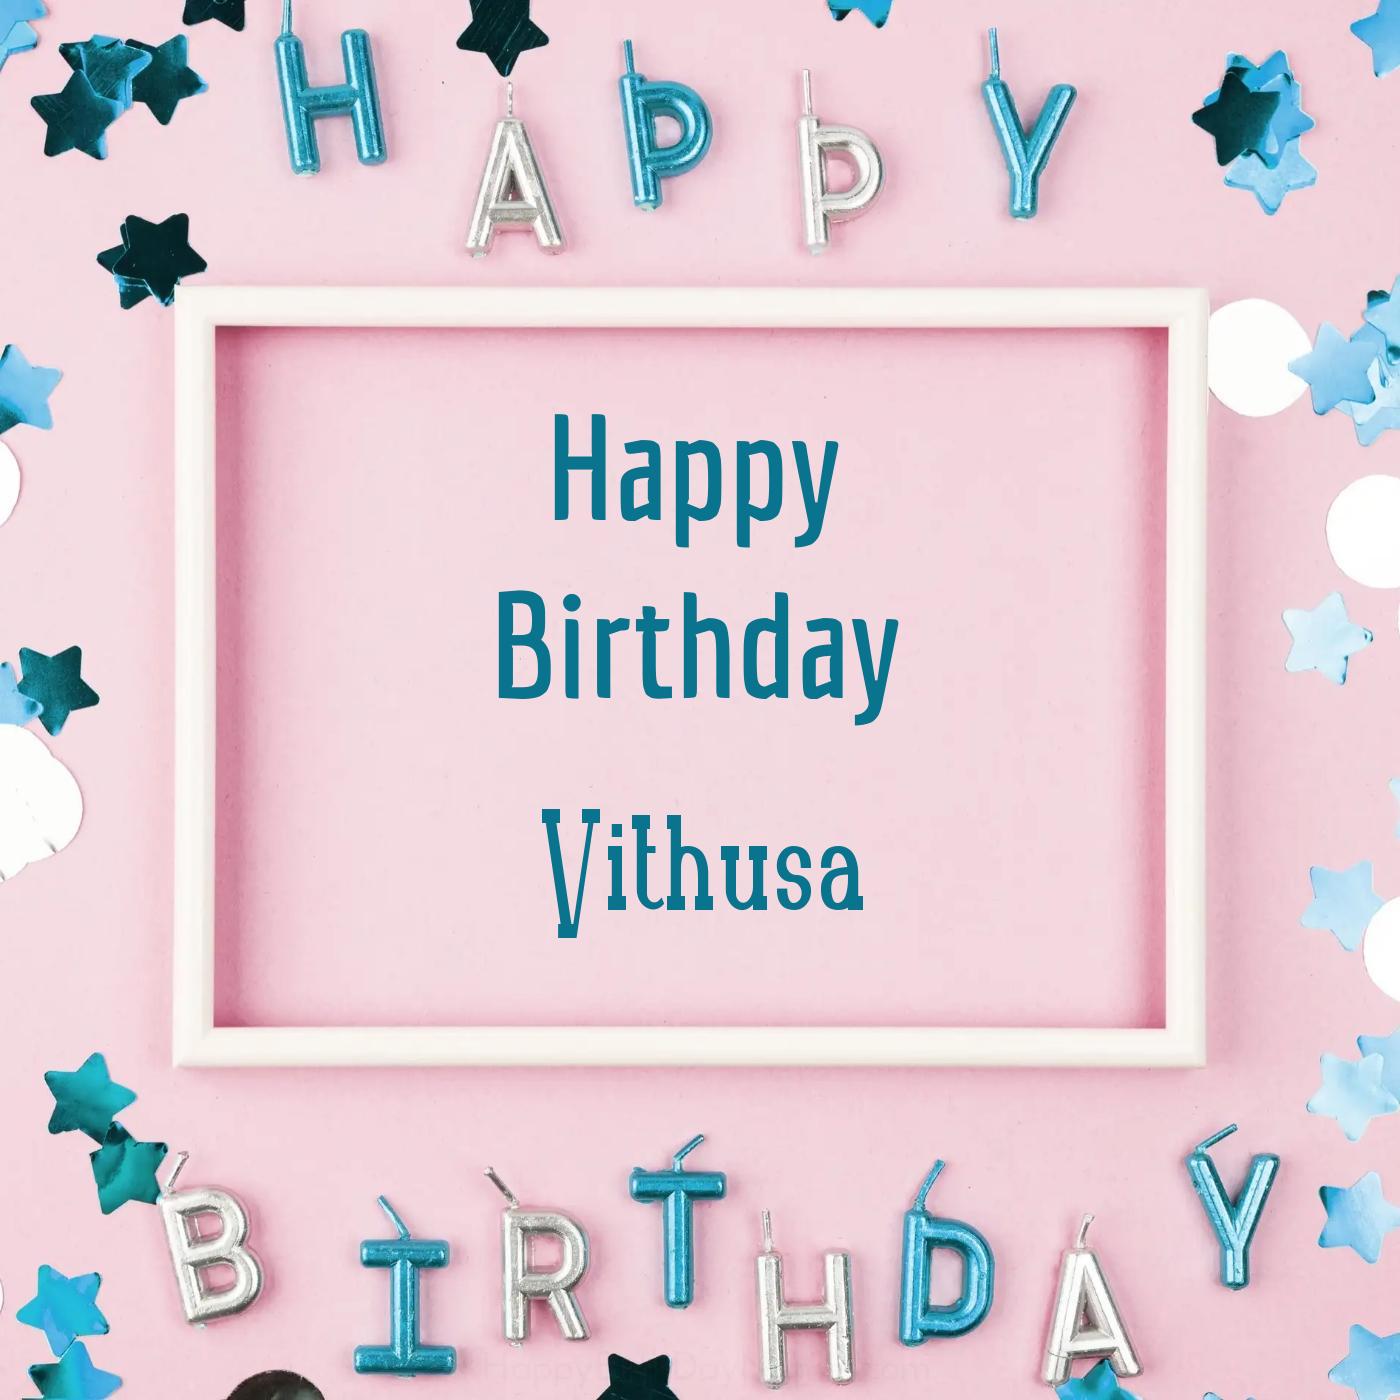 Happy Birthday Vithusa Pink Frame Card